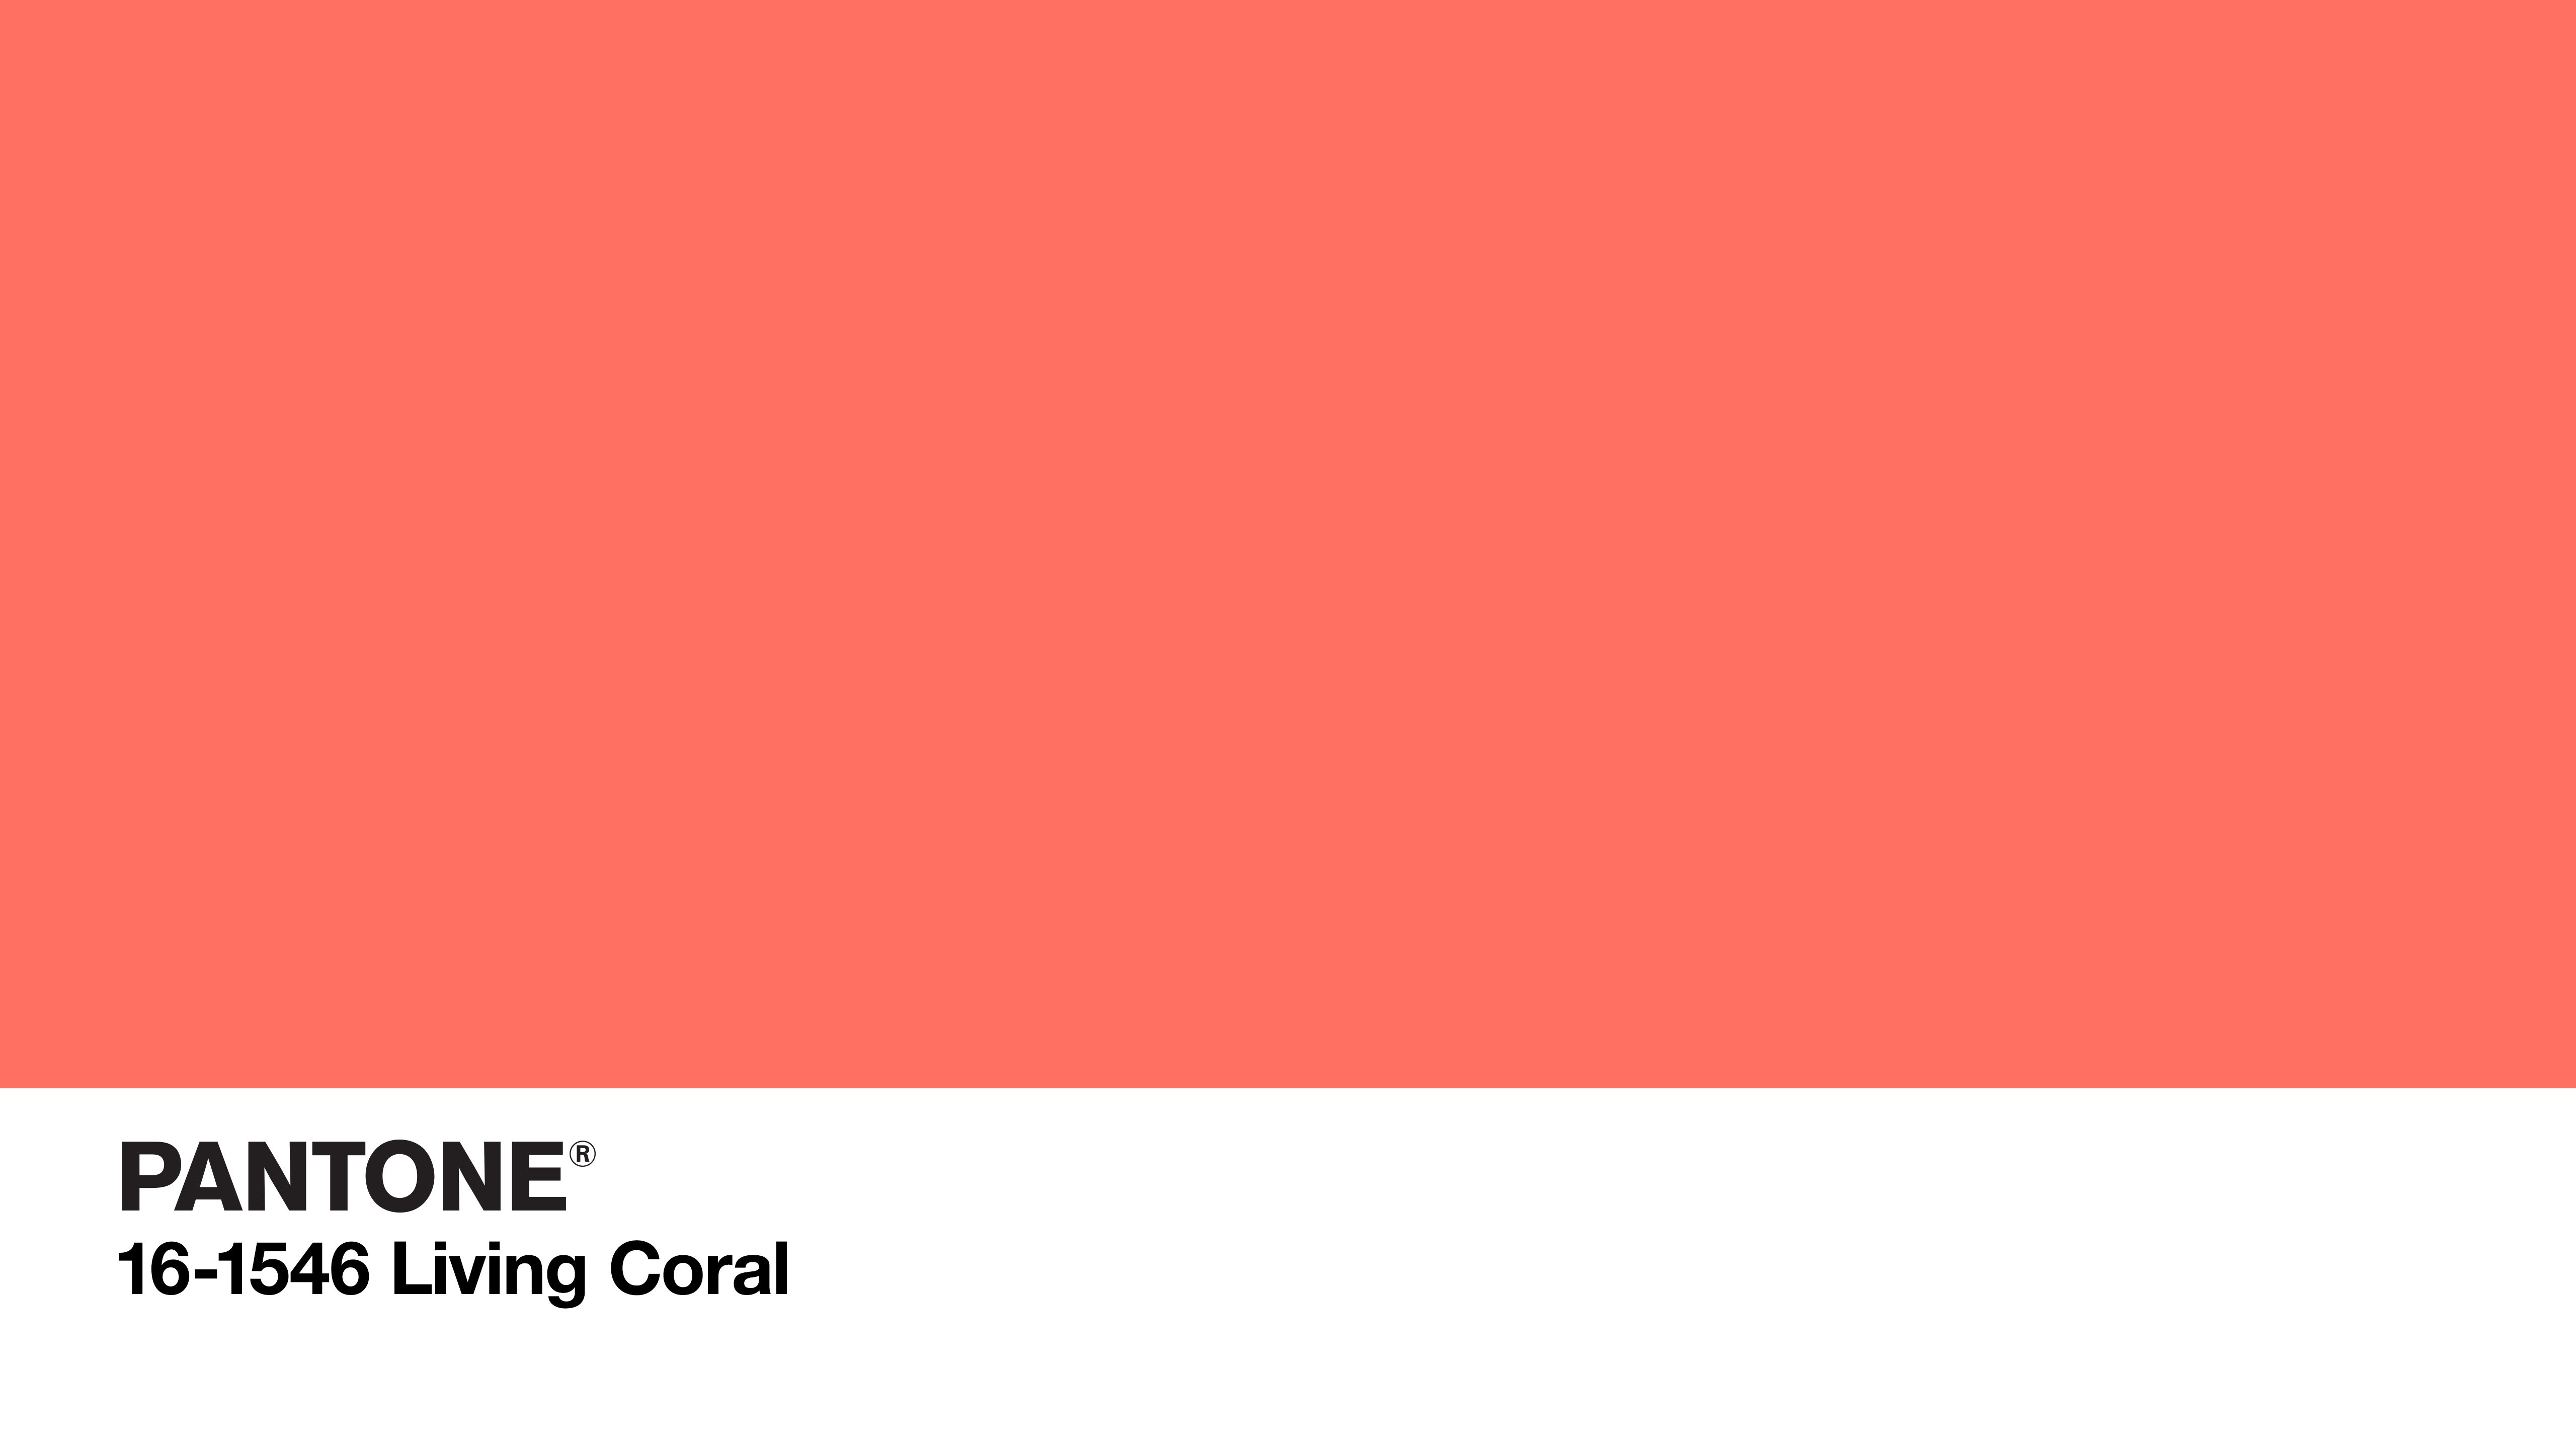 Coral цвет. Пантон 186. Лососевый цвет пантон. Цвет коралл пантон. Тона кораллового цвета пантон.